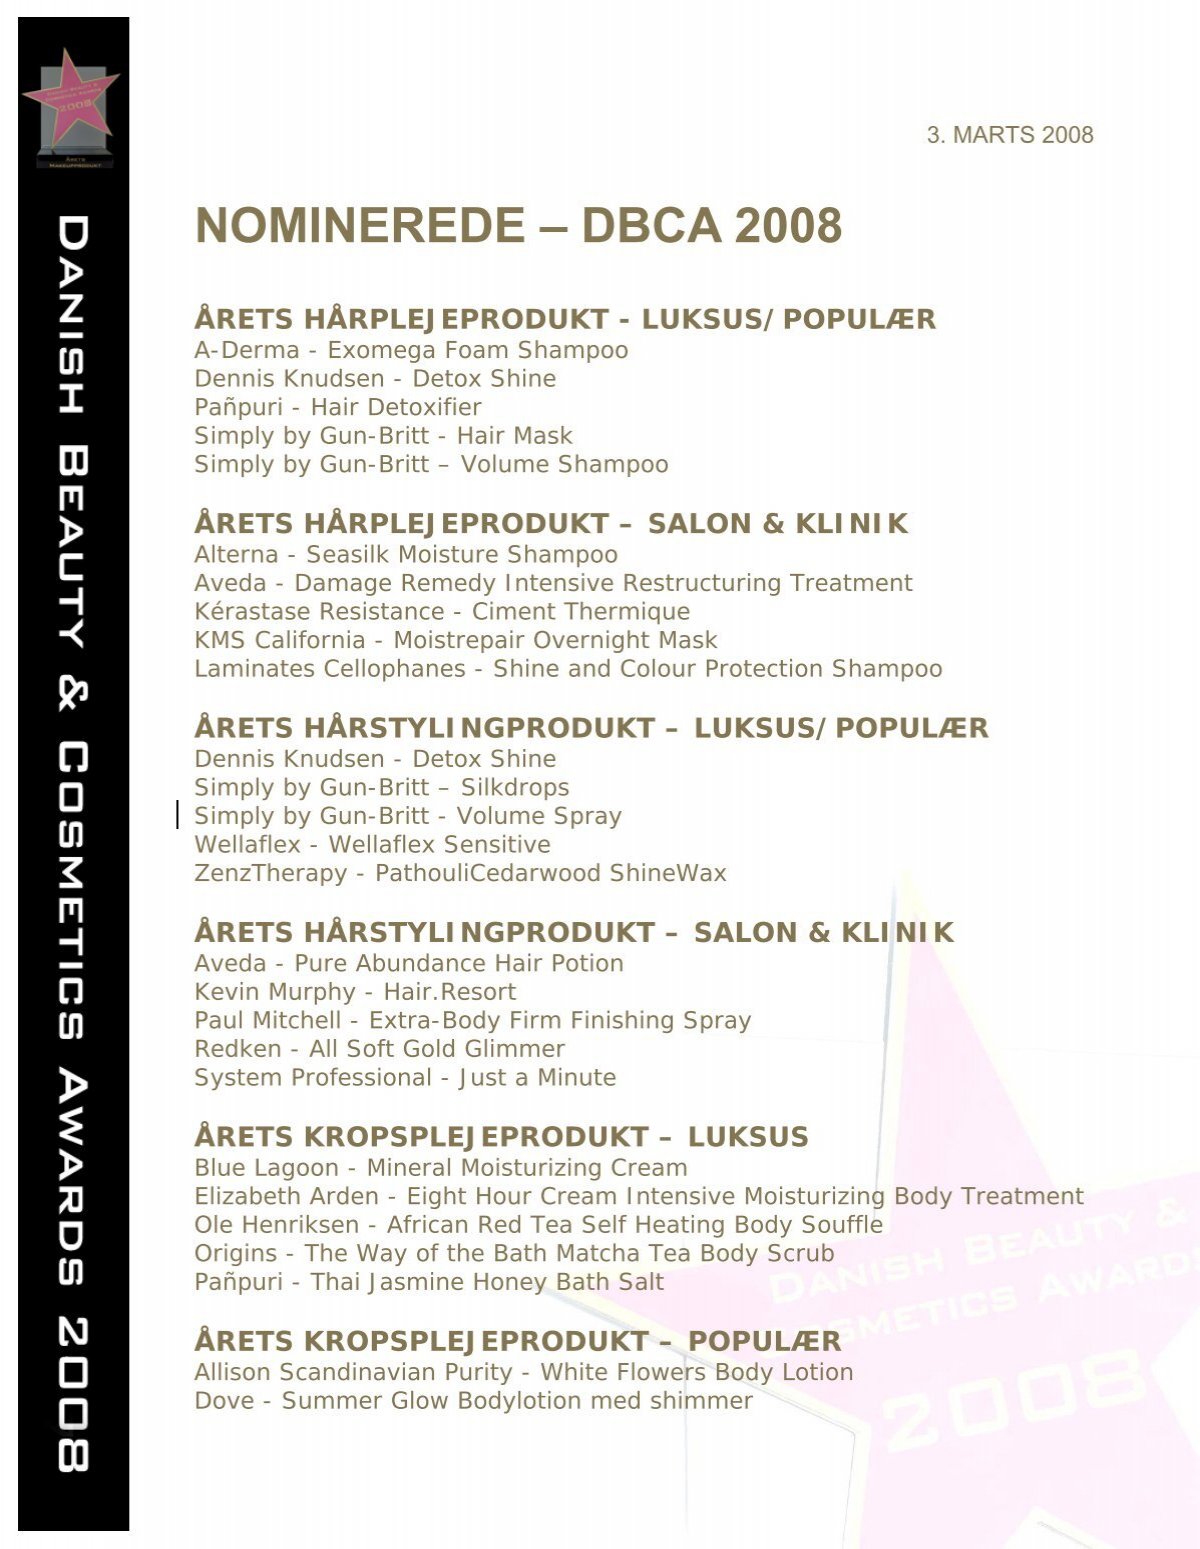 pdf] nominerede – dbca 2008 - Hair